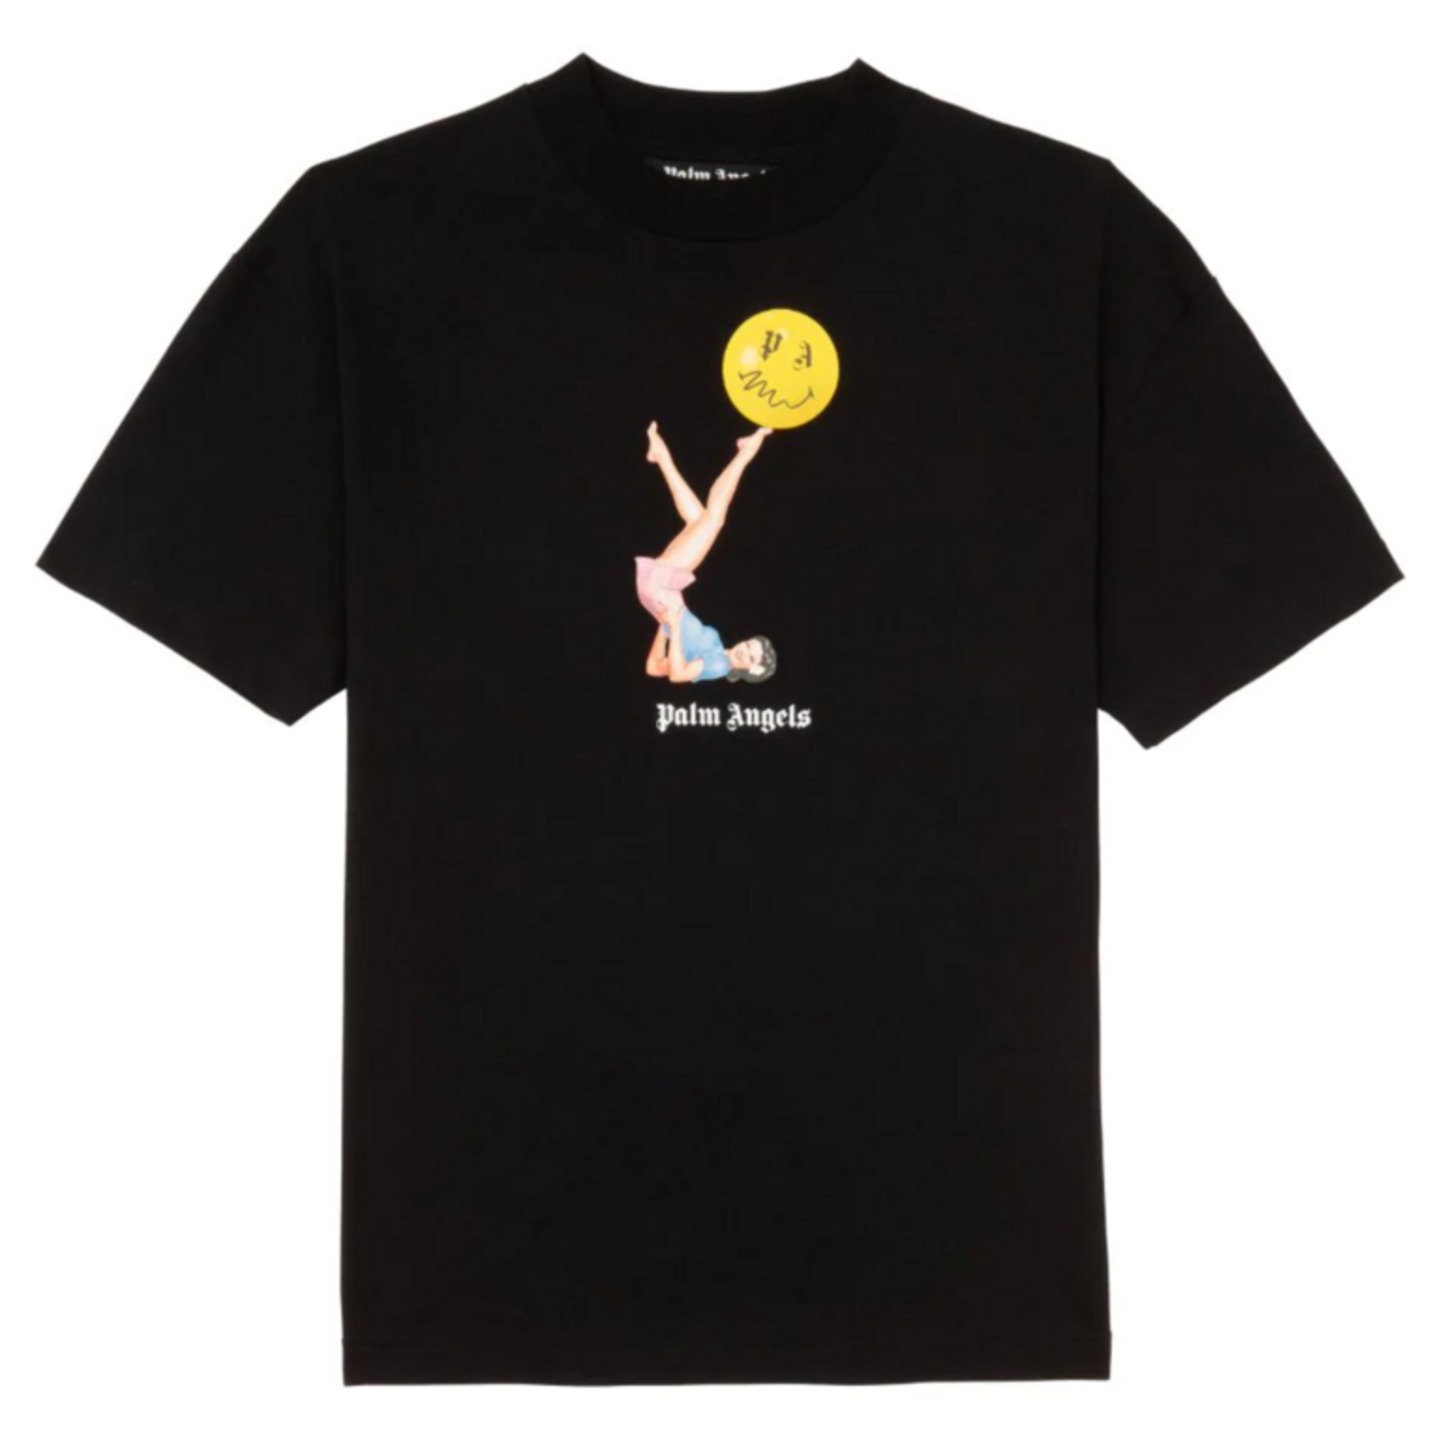 Palm Angels Pin-up Print T-shirt